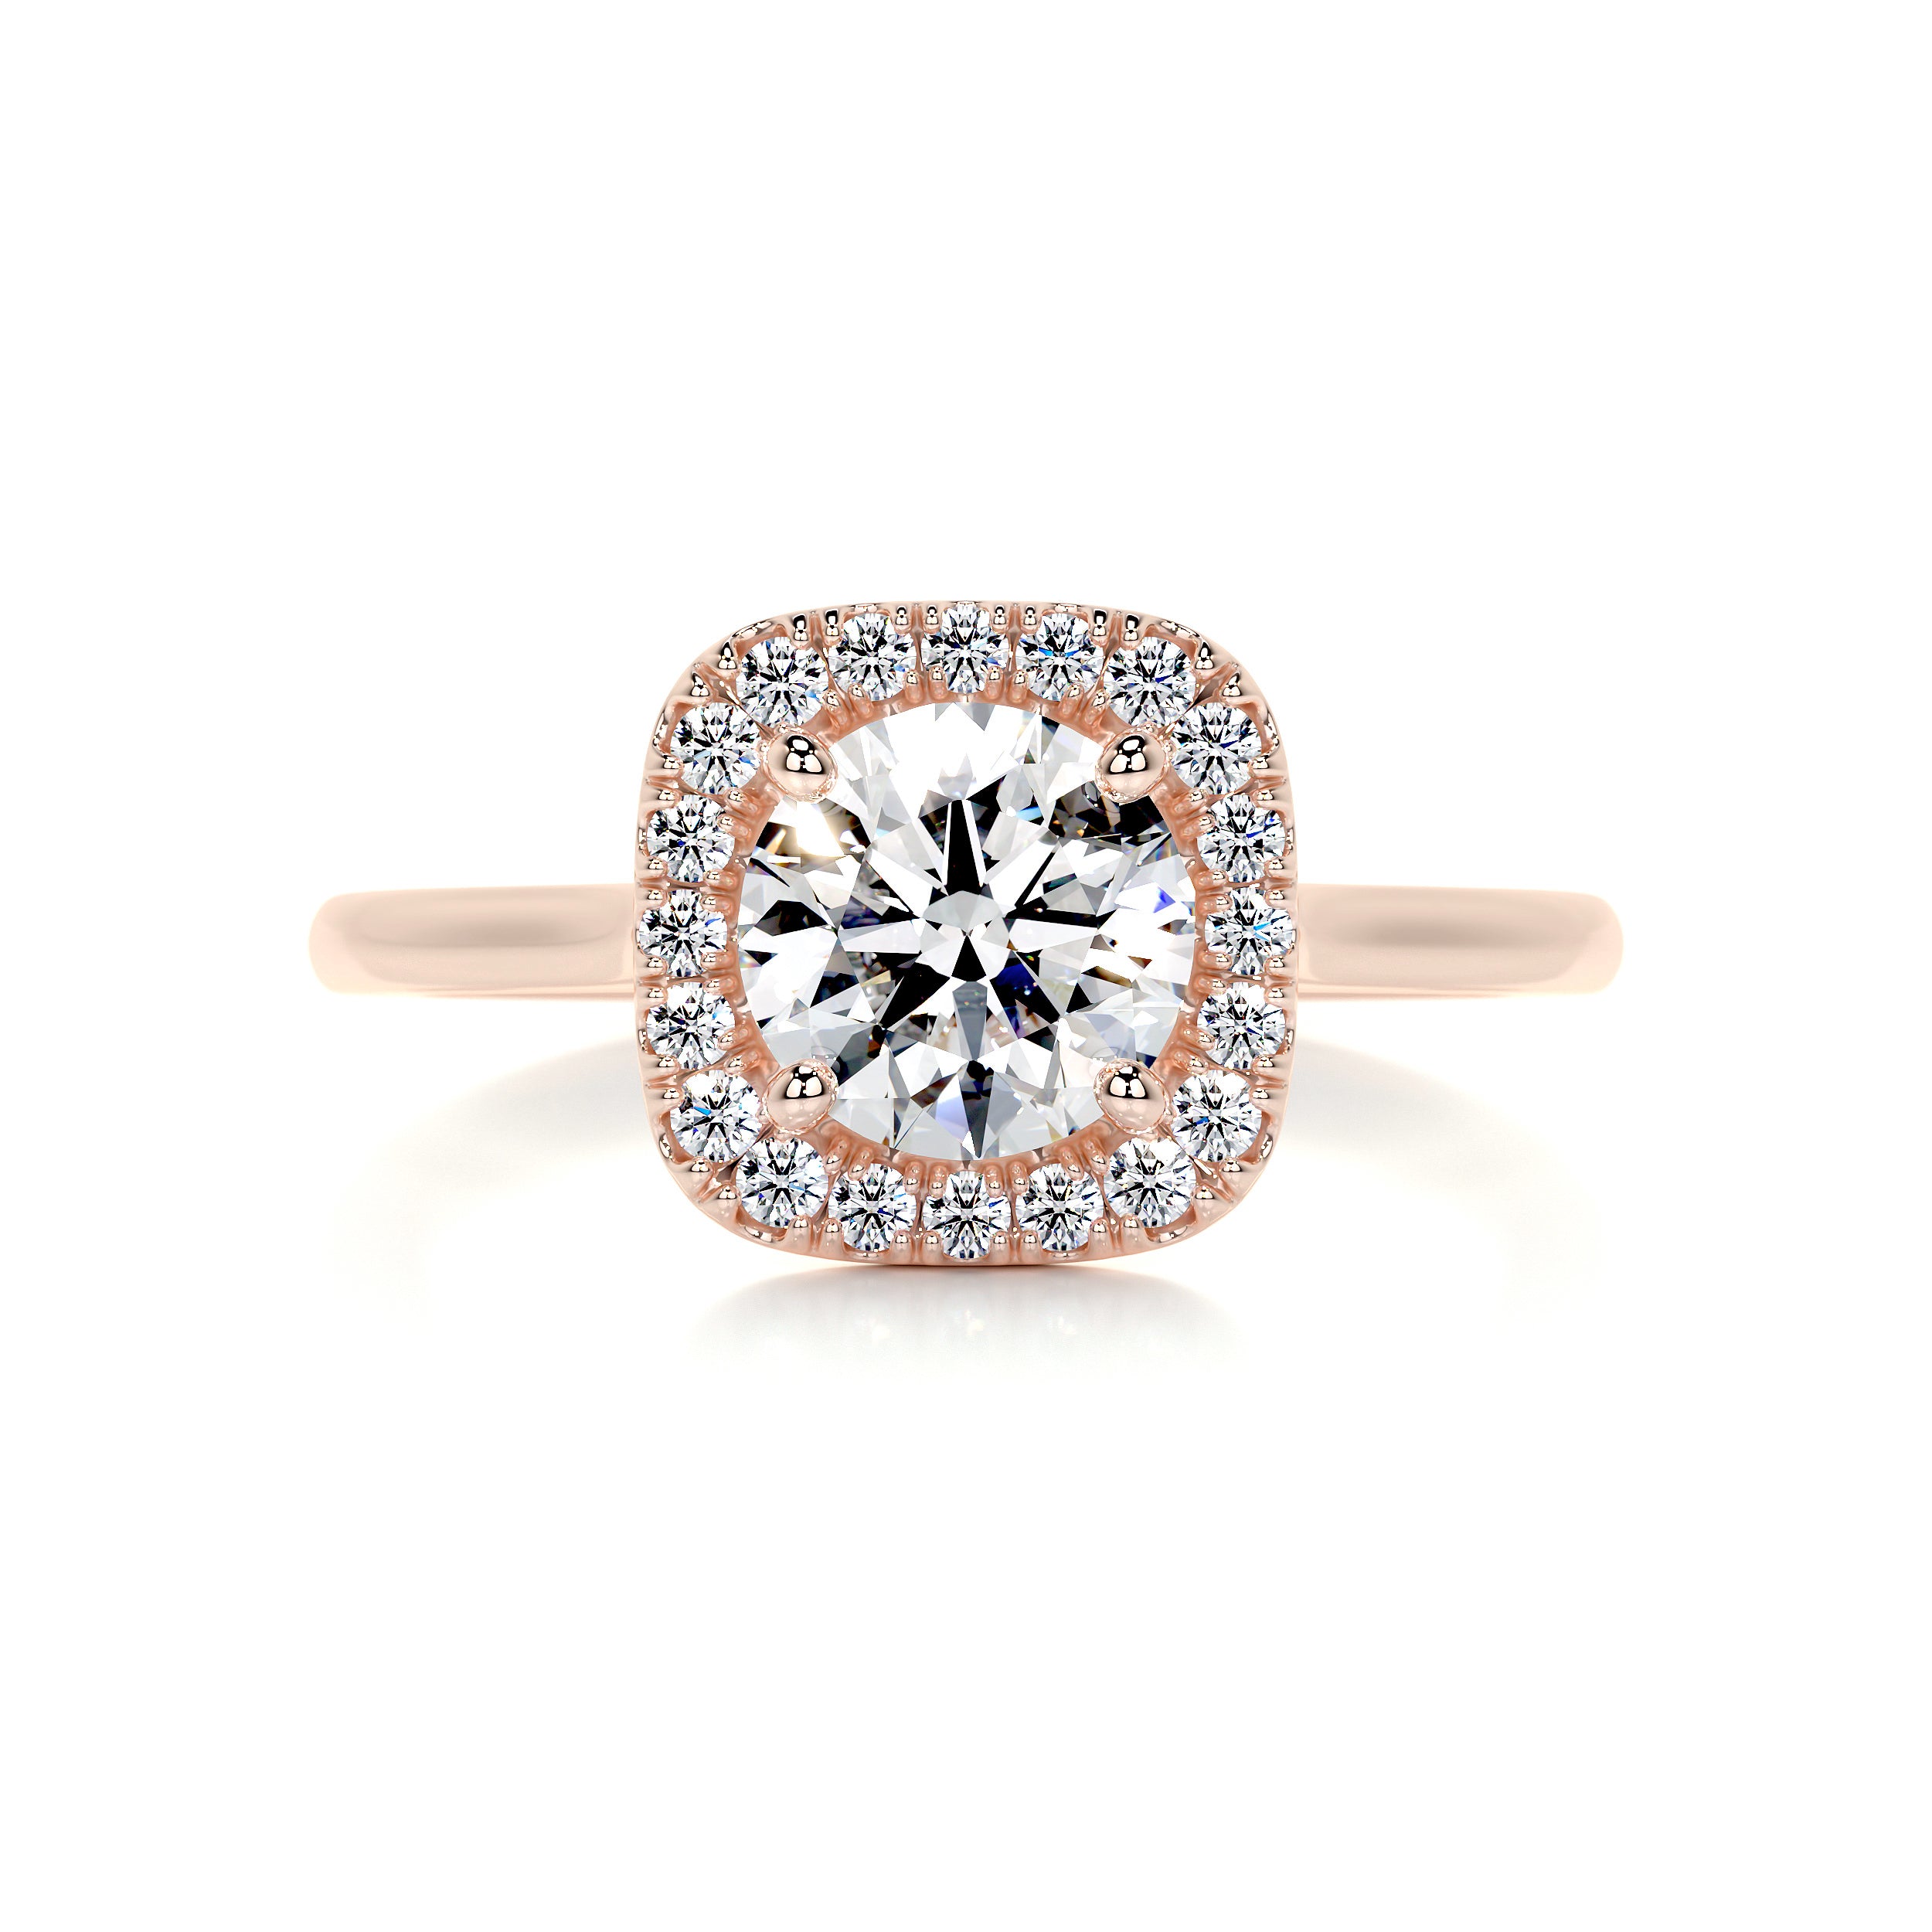 Claudia Diamond Engagement Ring   (1.15 Carat) -14K Rose Gold